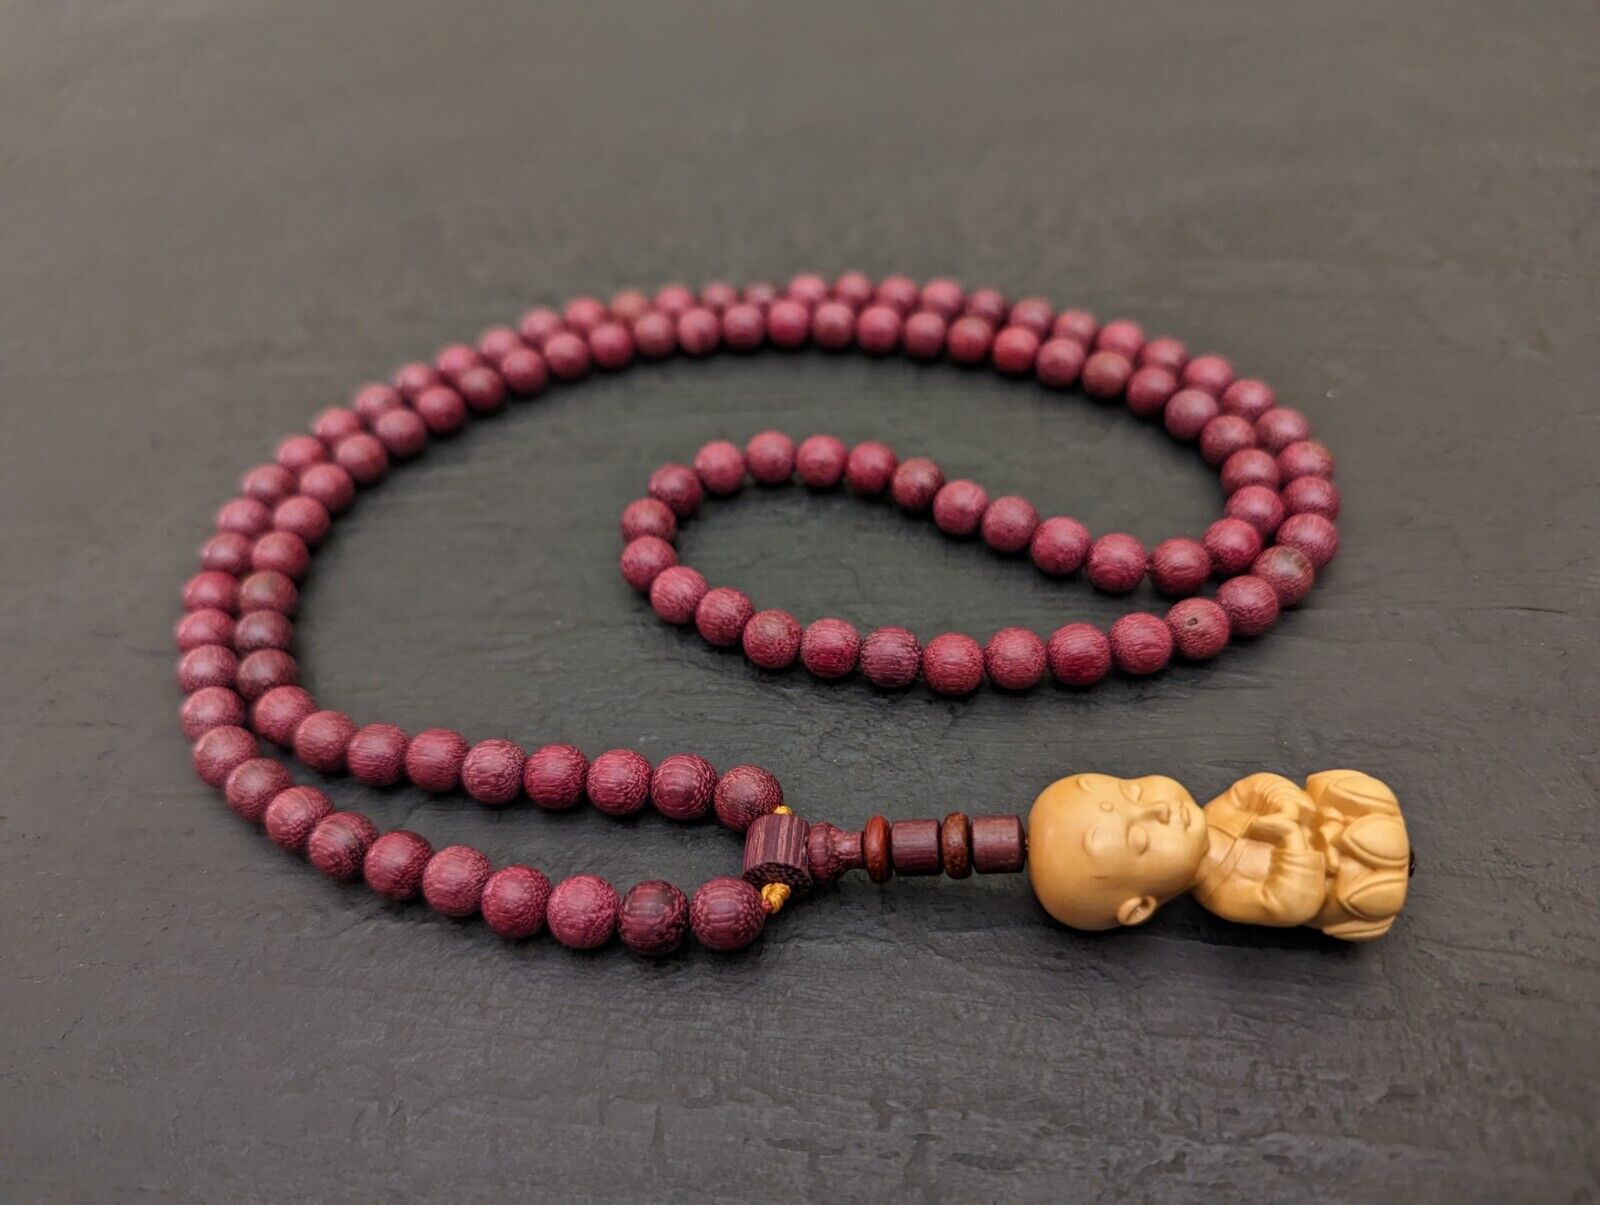 Buddha Pendant and Natural Rosewood Mala Prayer Necklace 108 Meditation Beads 